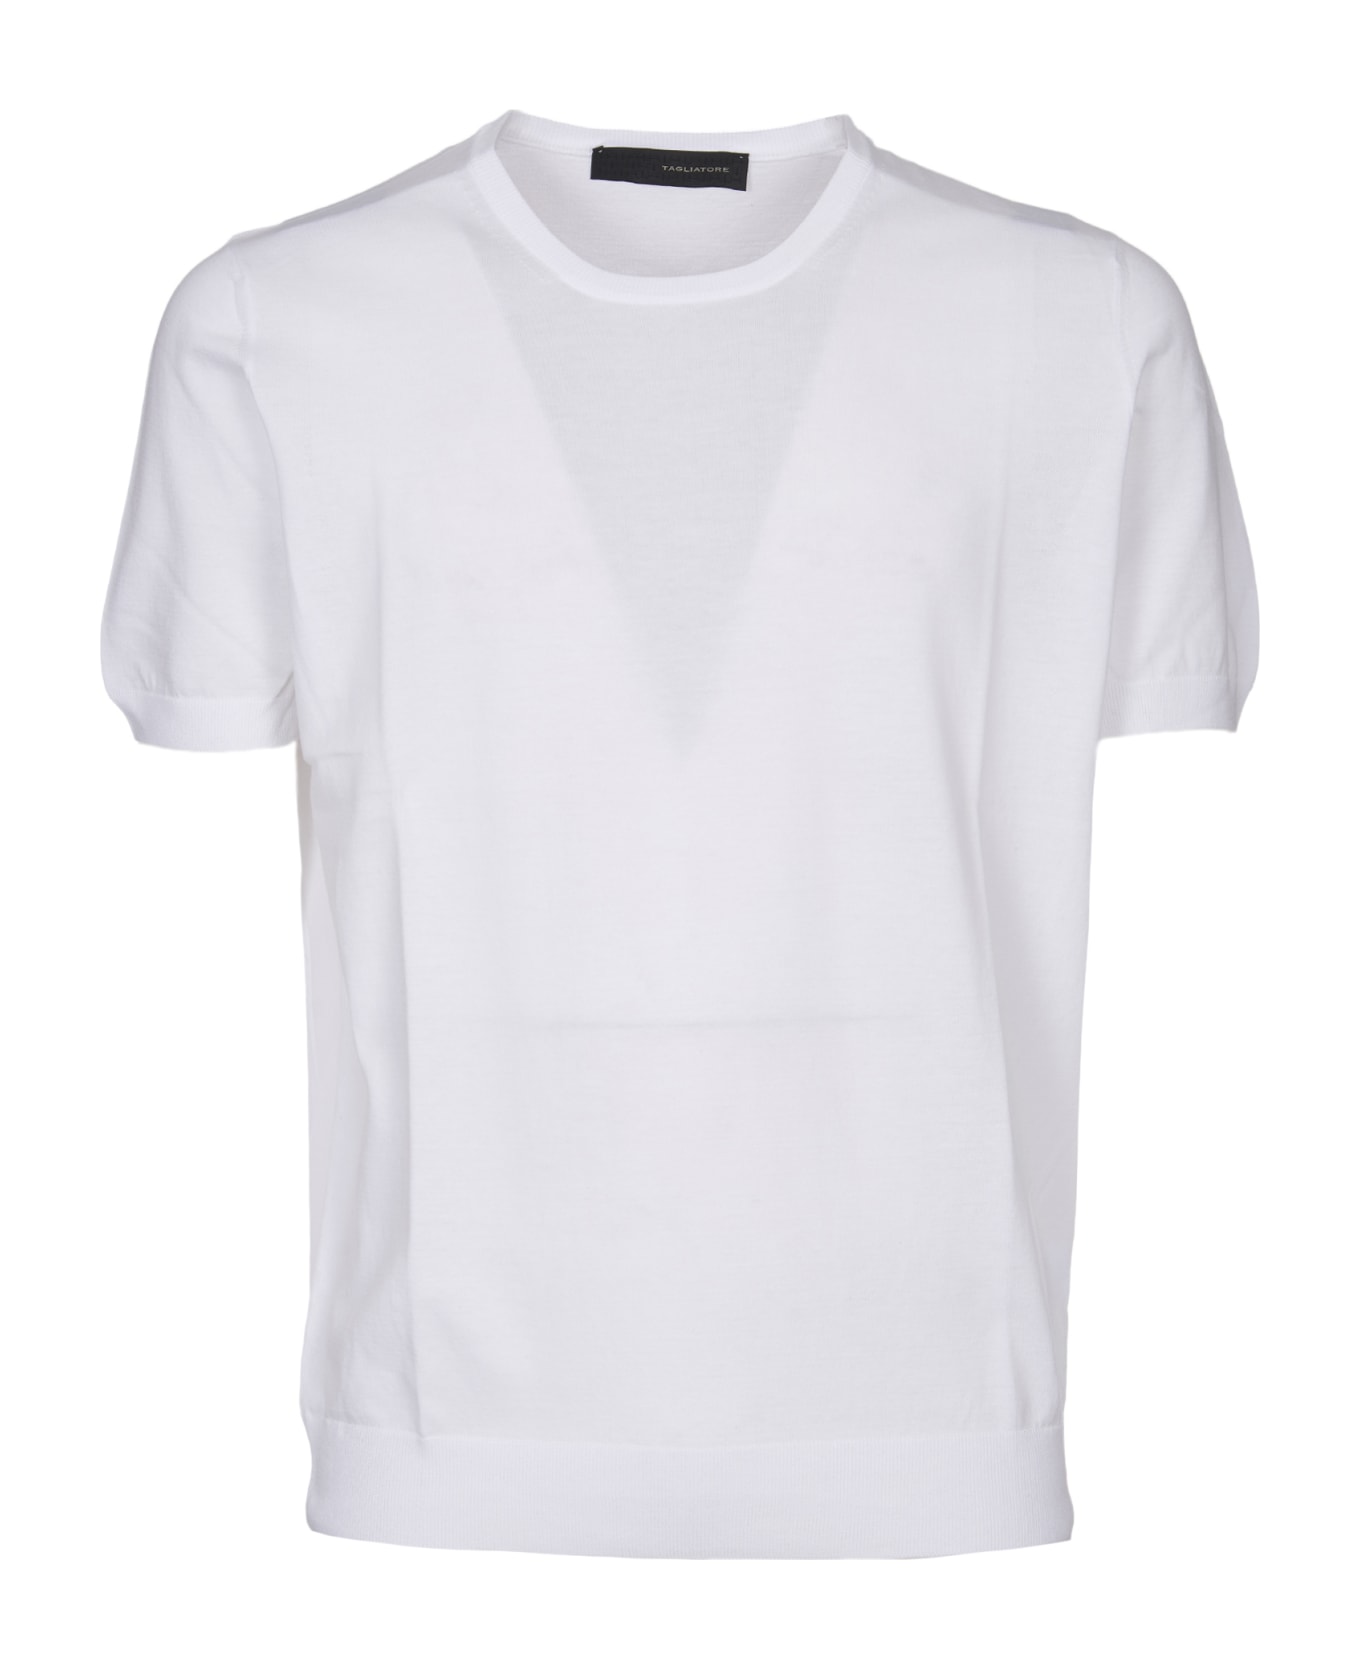 Tagliatore T-shirt - White